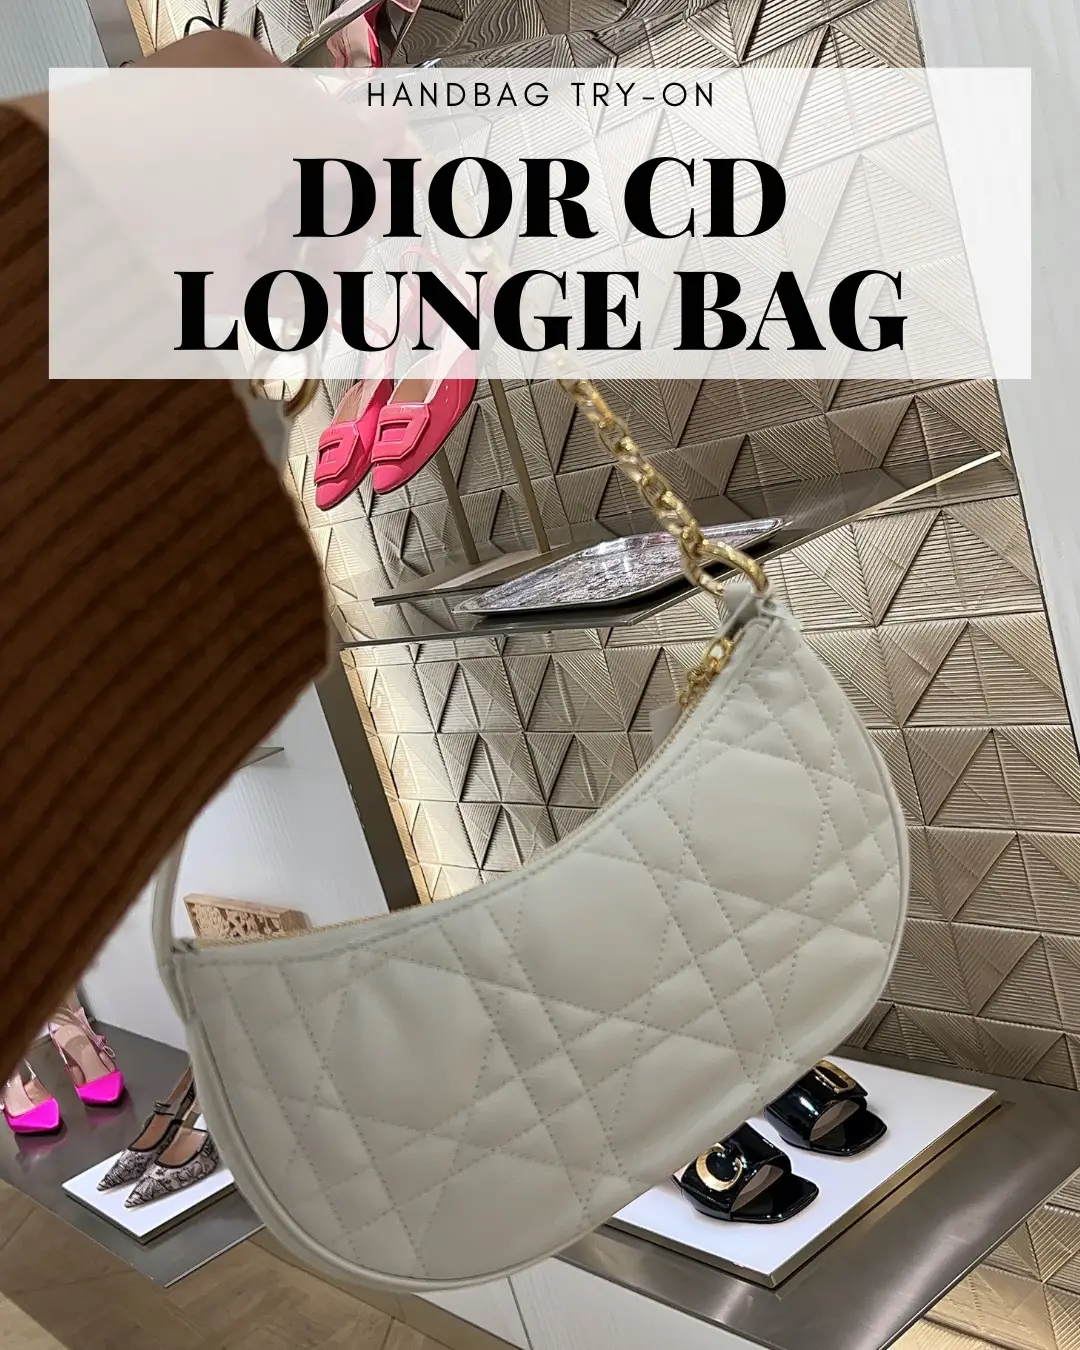 ✨ NEW DIOR HANDBAG ✨ the CD Lounge Bag 🤩 #dior #handbags #newrelease 